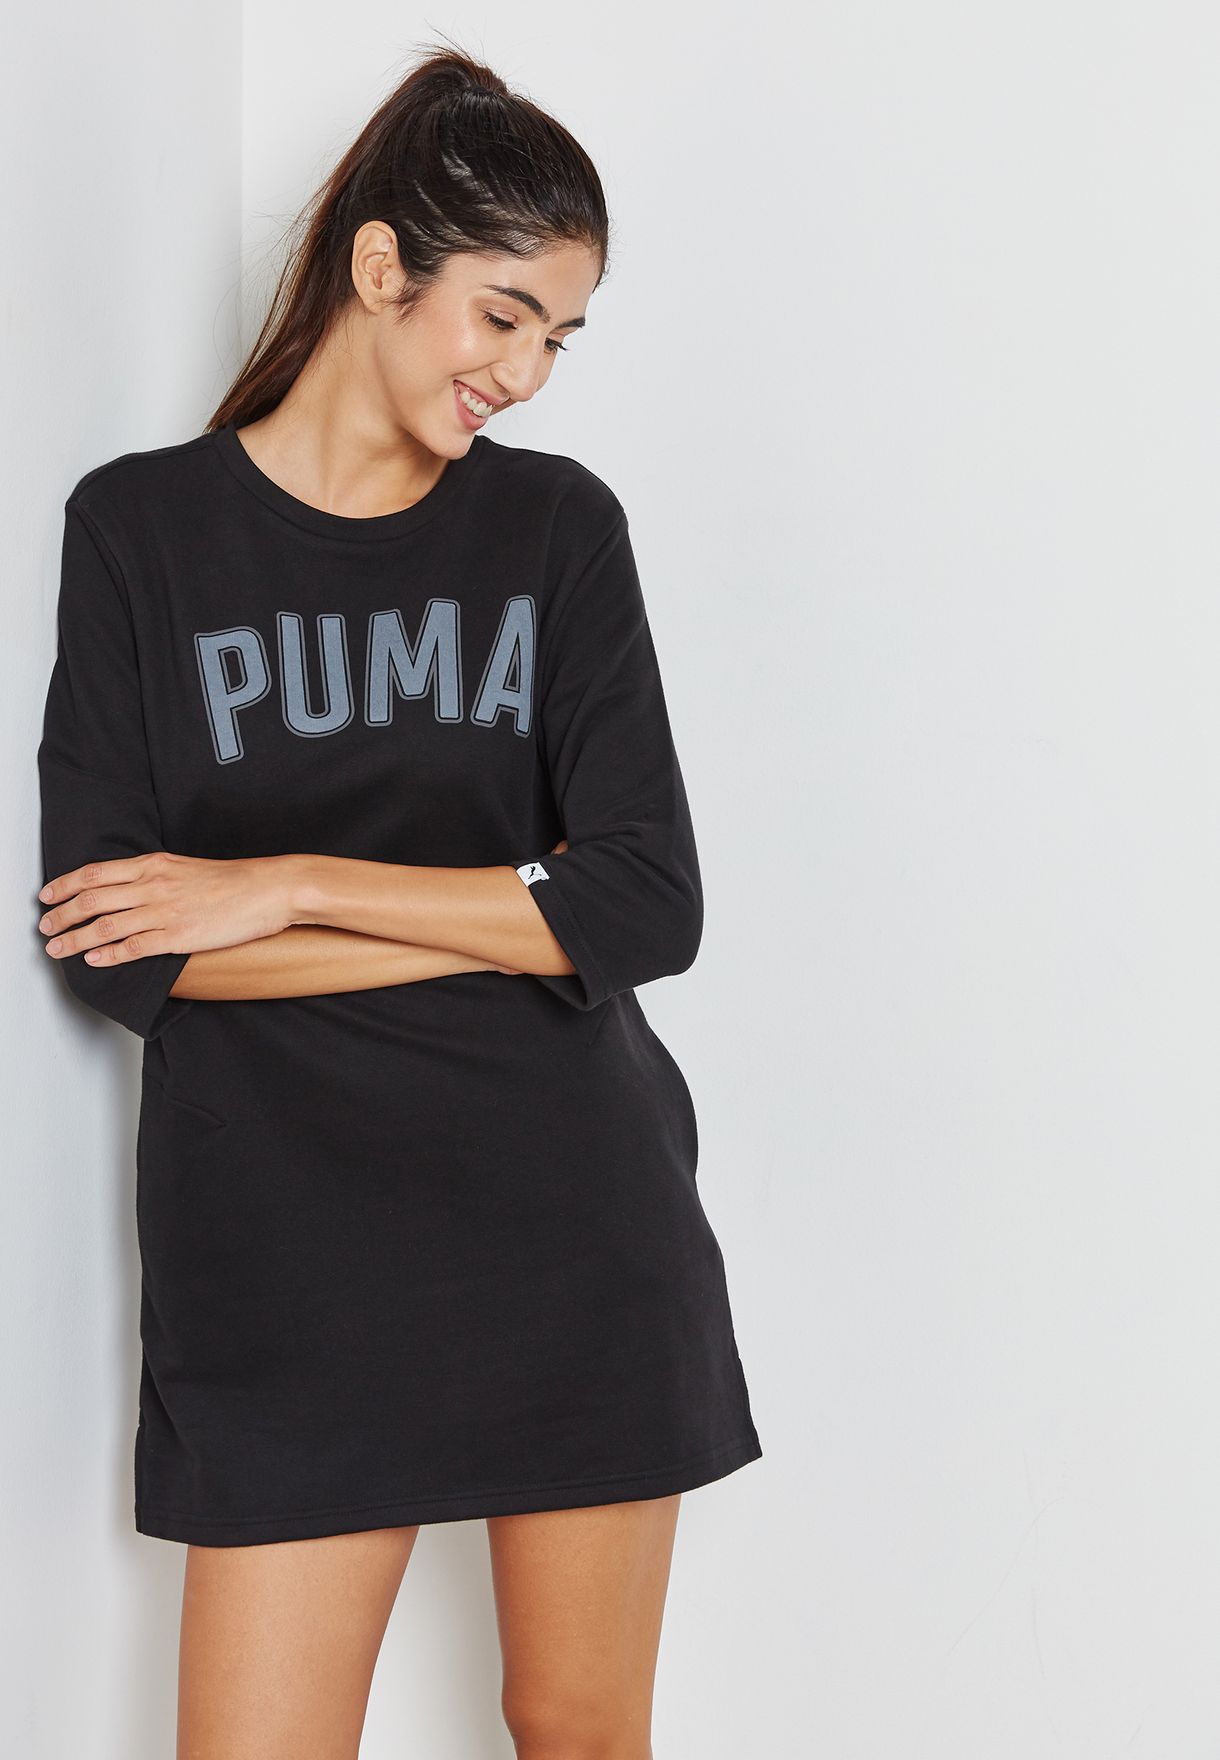 puma girl clothes